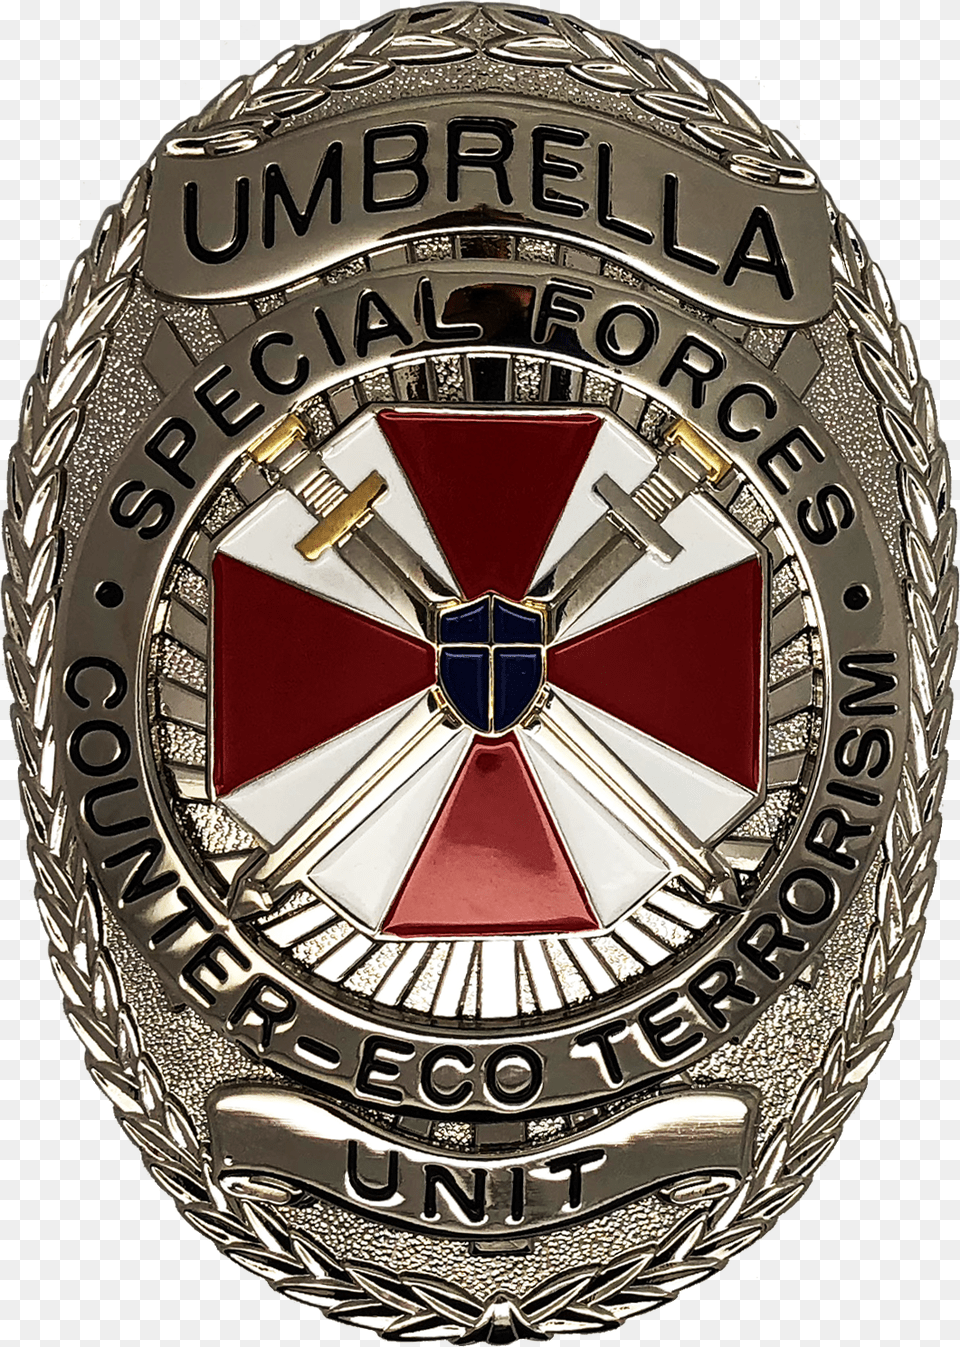 Resident Evil Corporation Umbrella, Badge, Logo, Symbol, Wristwatch Png Image